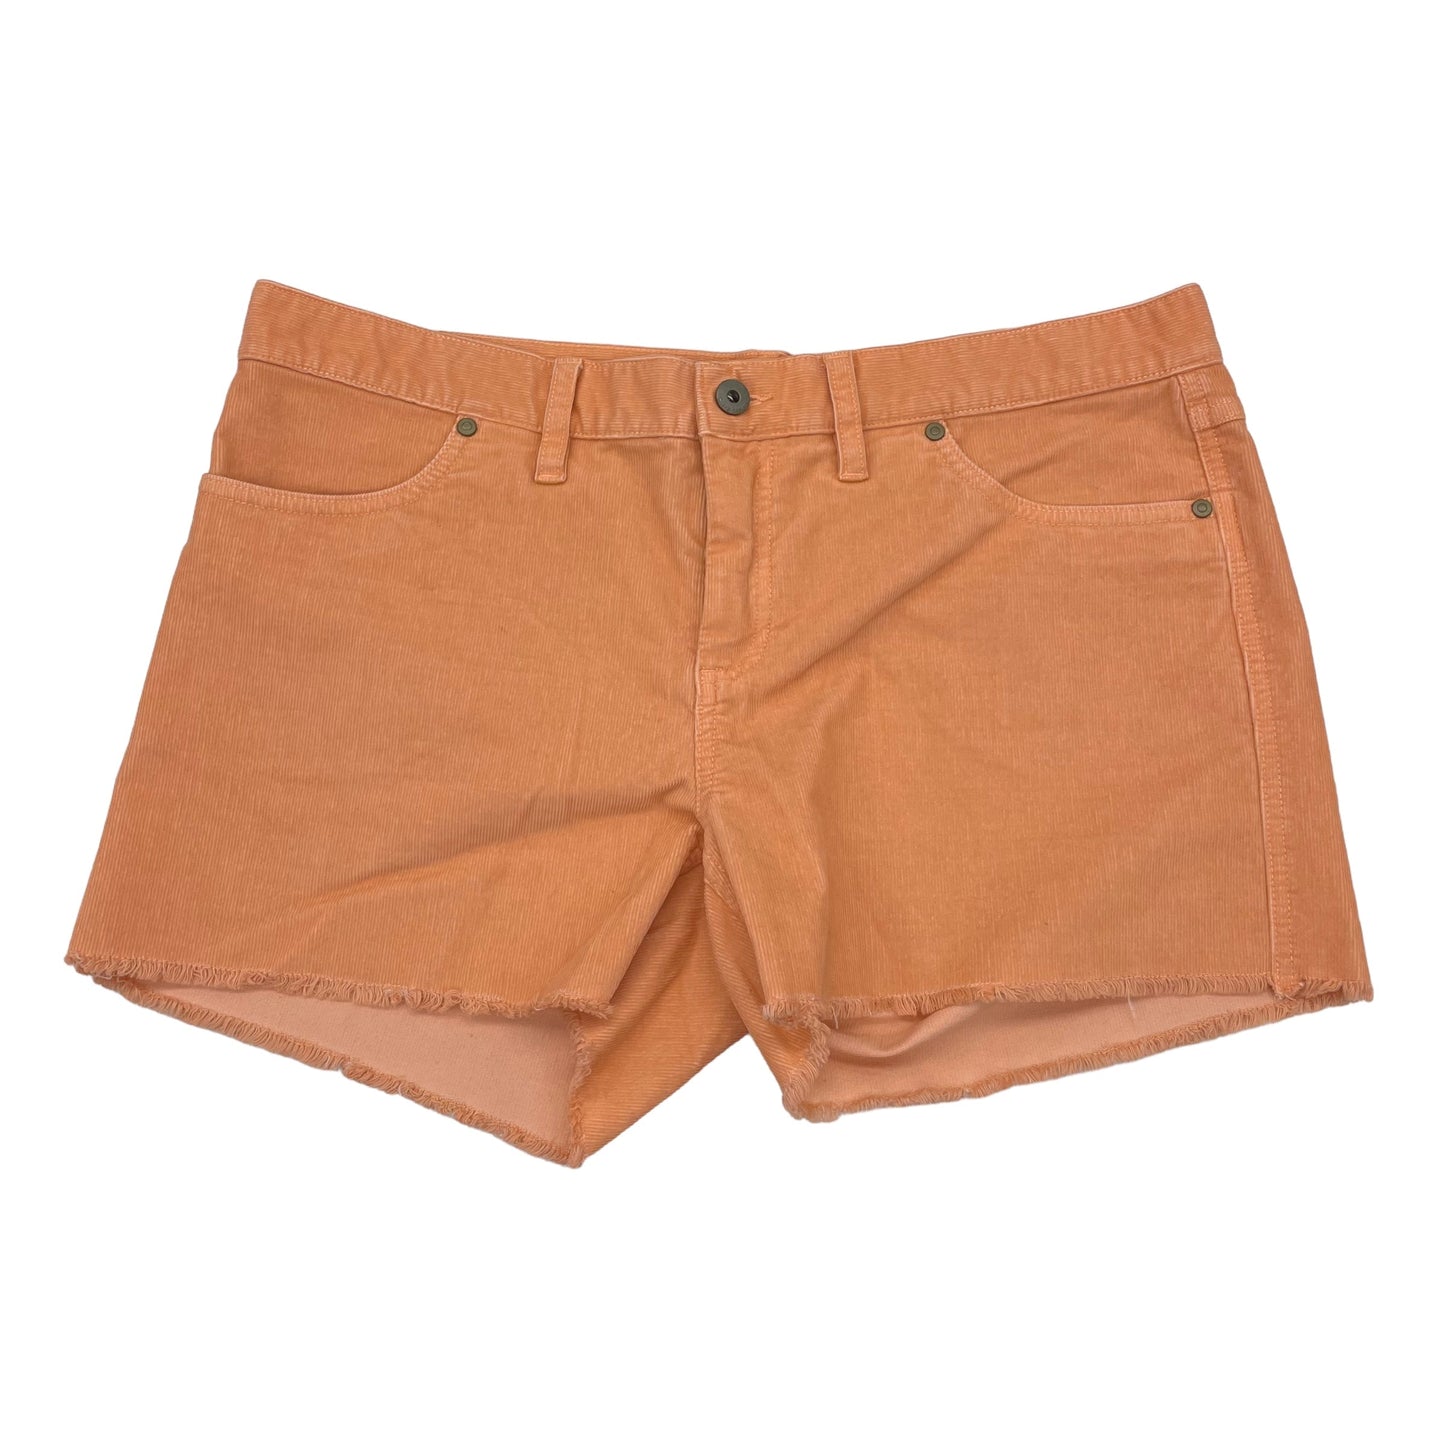 Orange Shorts Carve Designs, Size 10